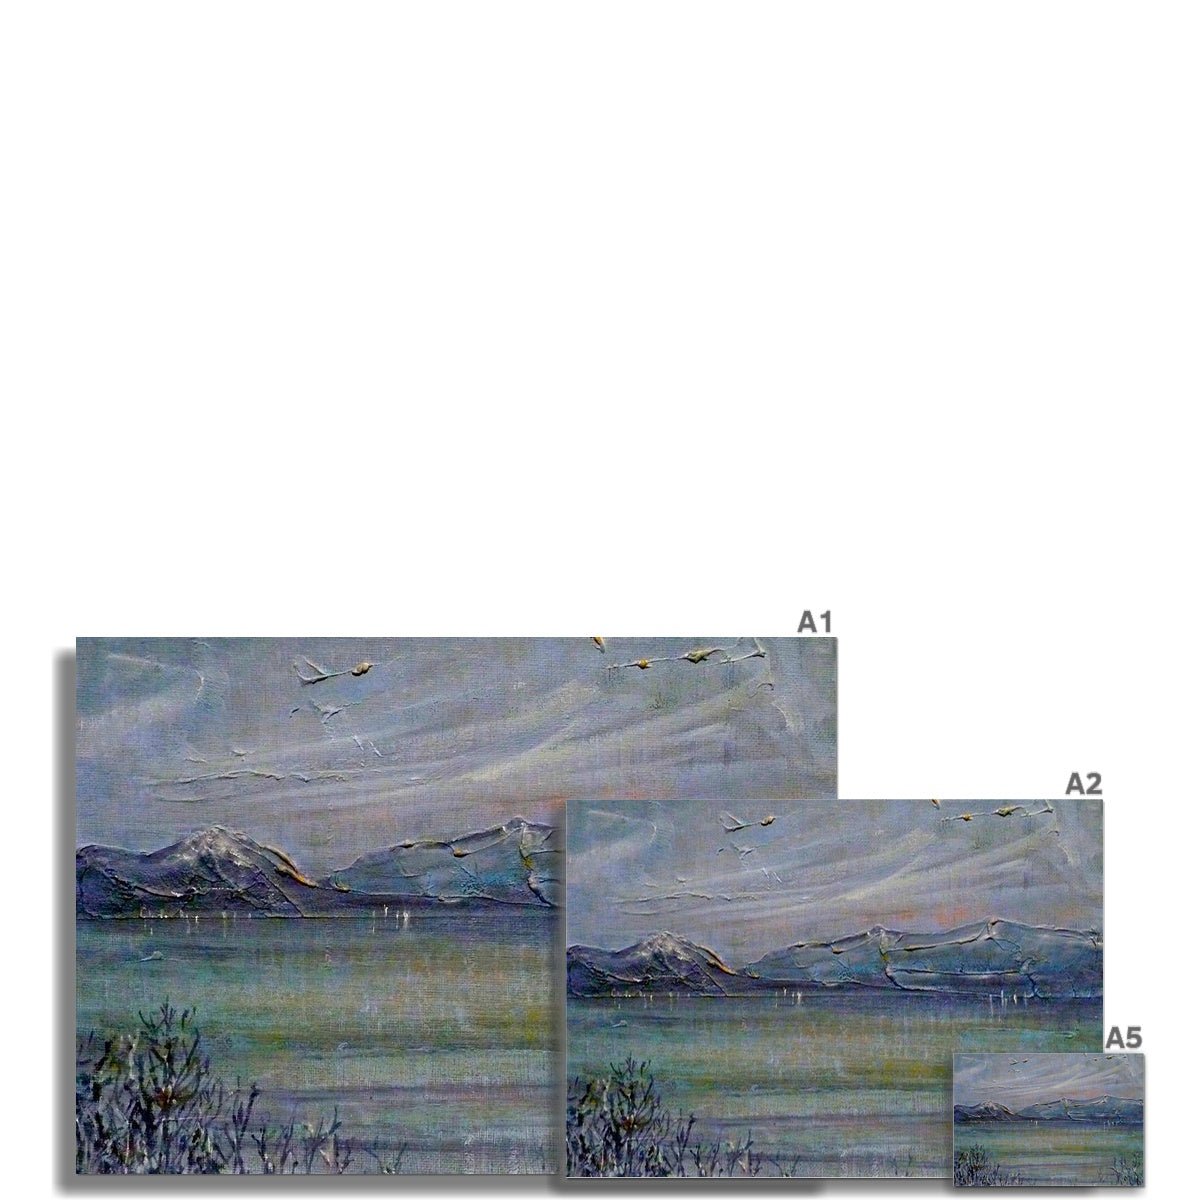 Loch Morlich Moonlight Painting | Fine Art Prints From Scotland-Unframed Prints-Scottish Lochs & Mountains Art Gallery-Paintings, Prints, Homeware, Art Gifts From Scotland By Scottish Artist Kevin Hunter